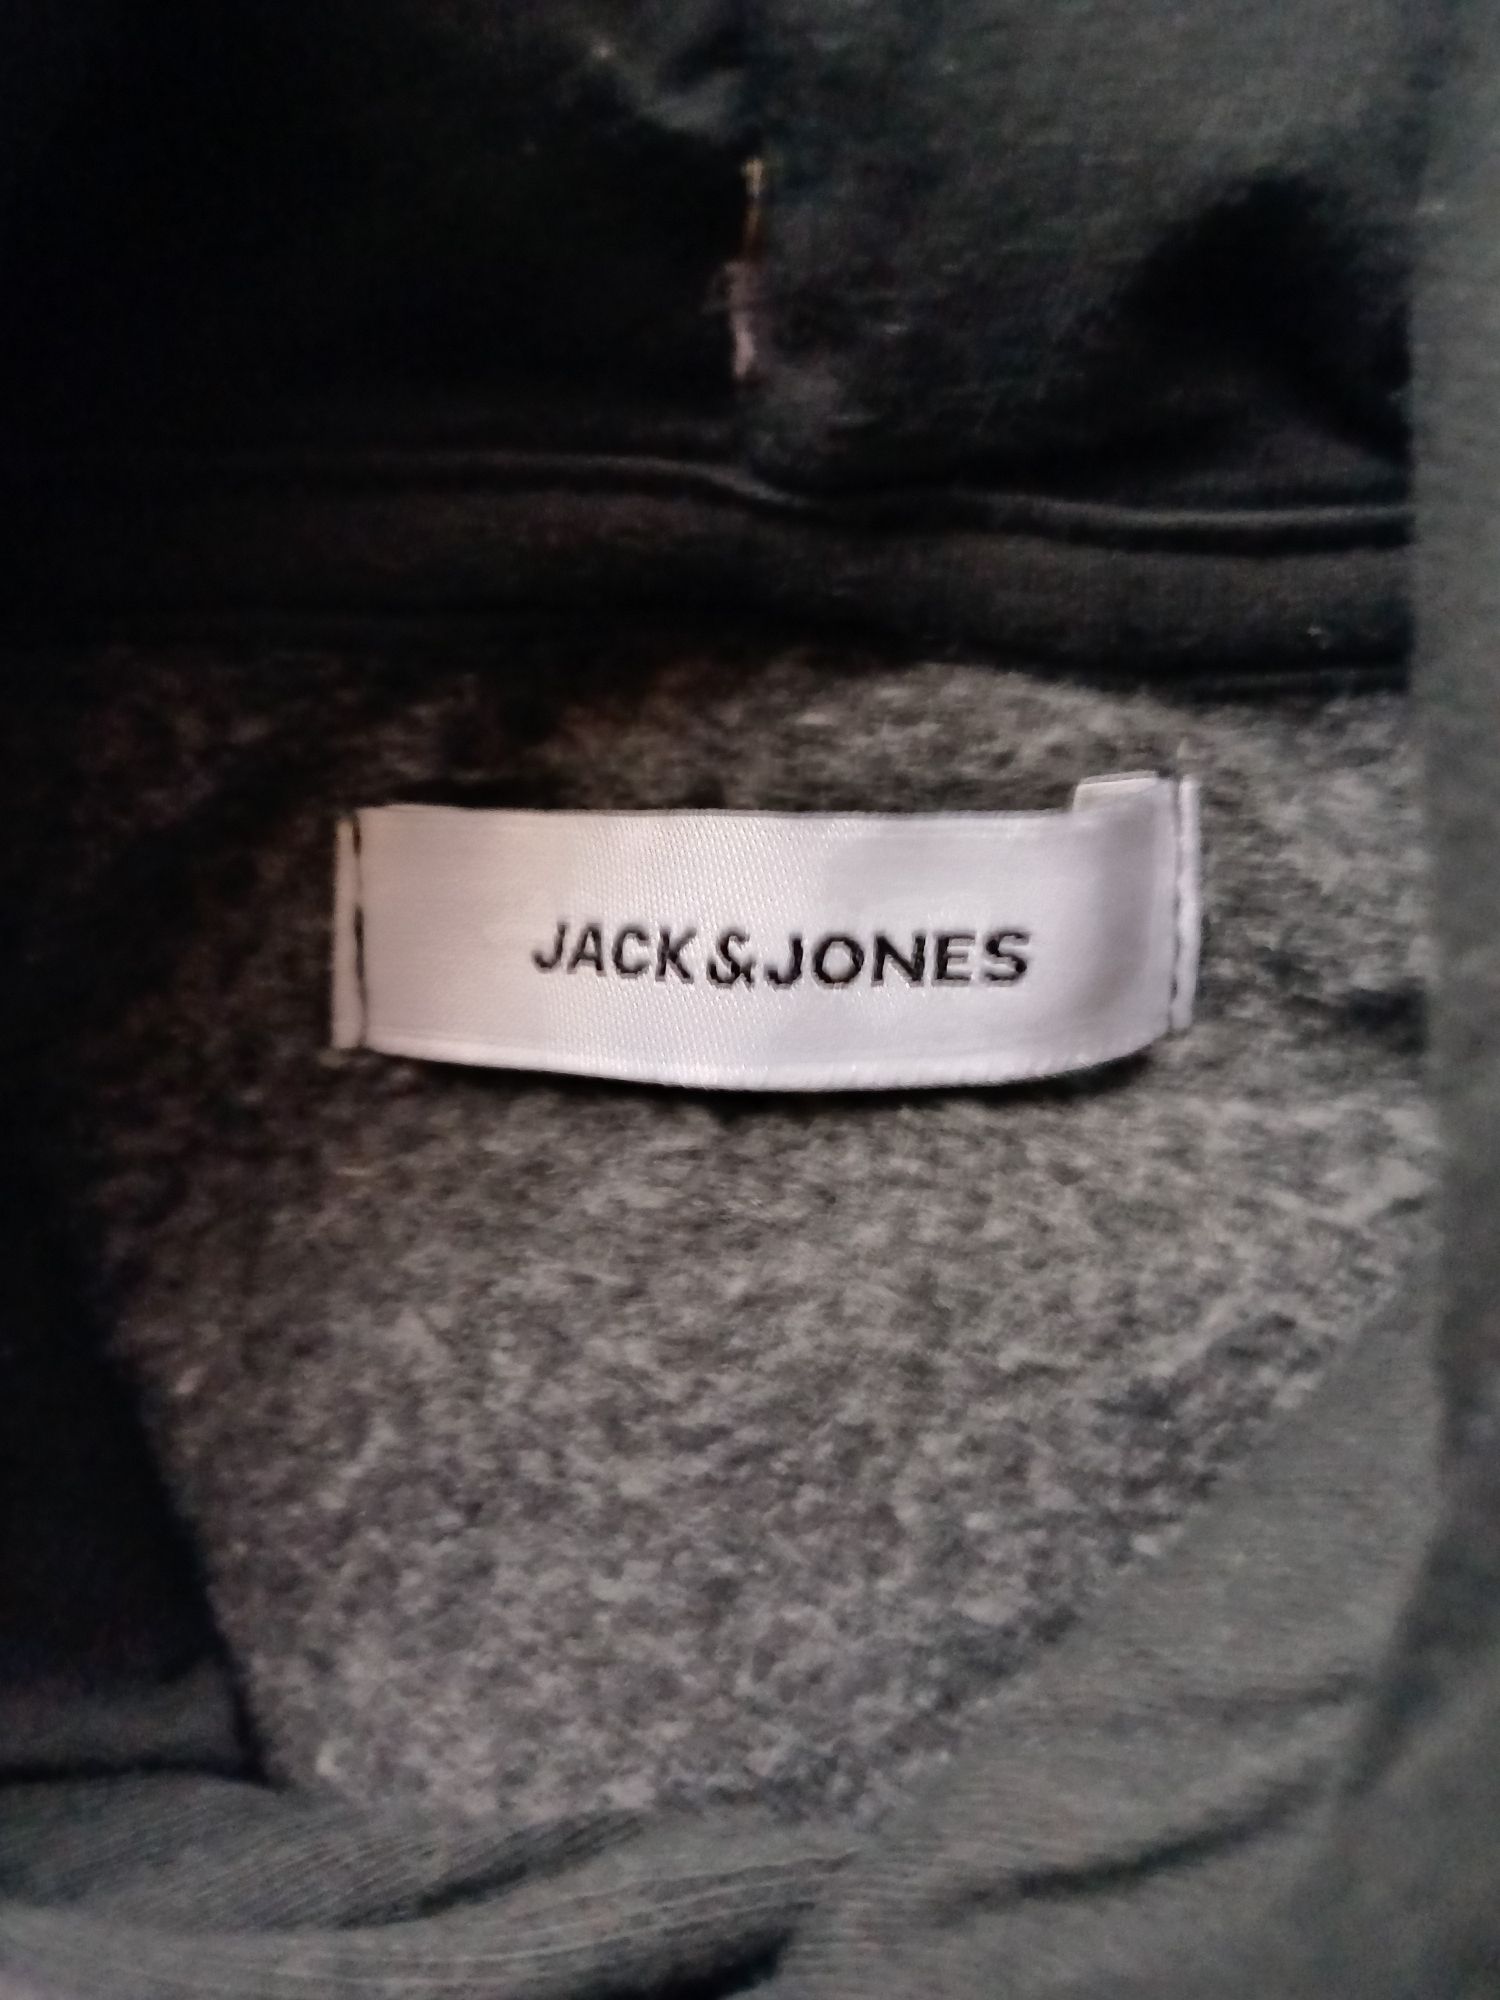 Męska bluza Jack&Jones